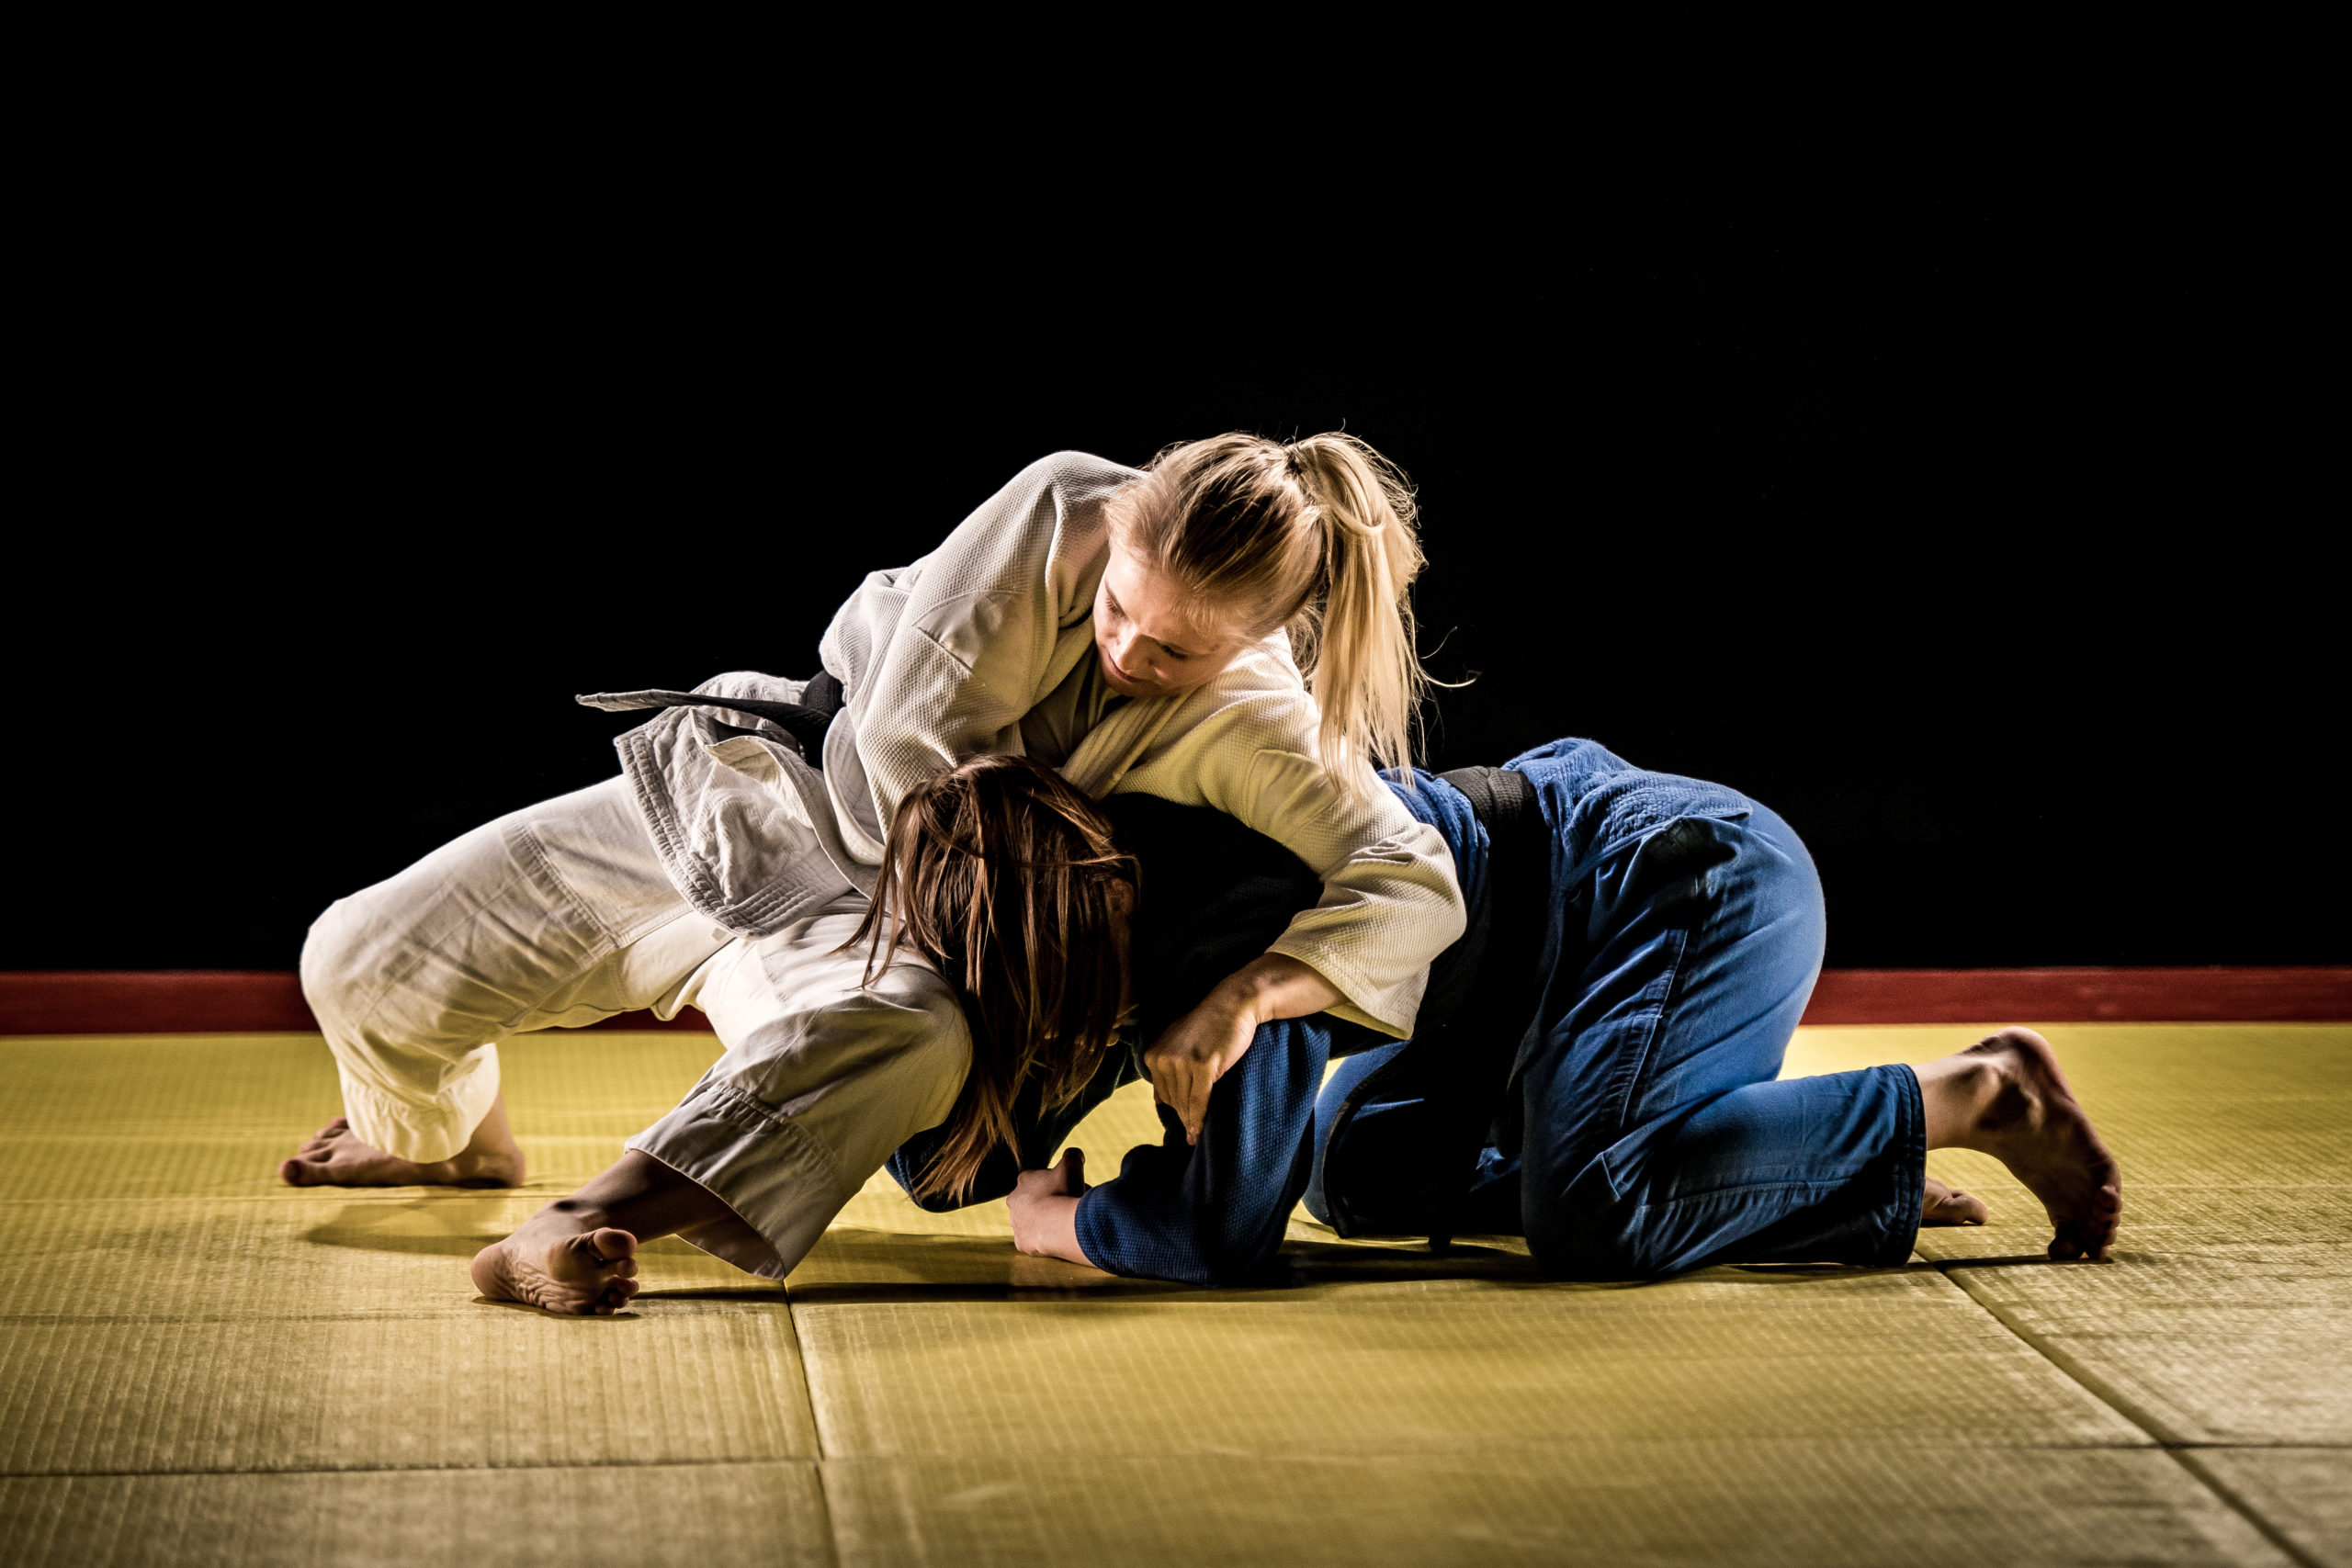 Two female judokas wrestling on a tatami mat